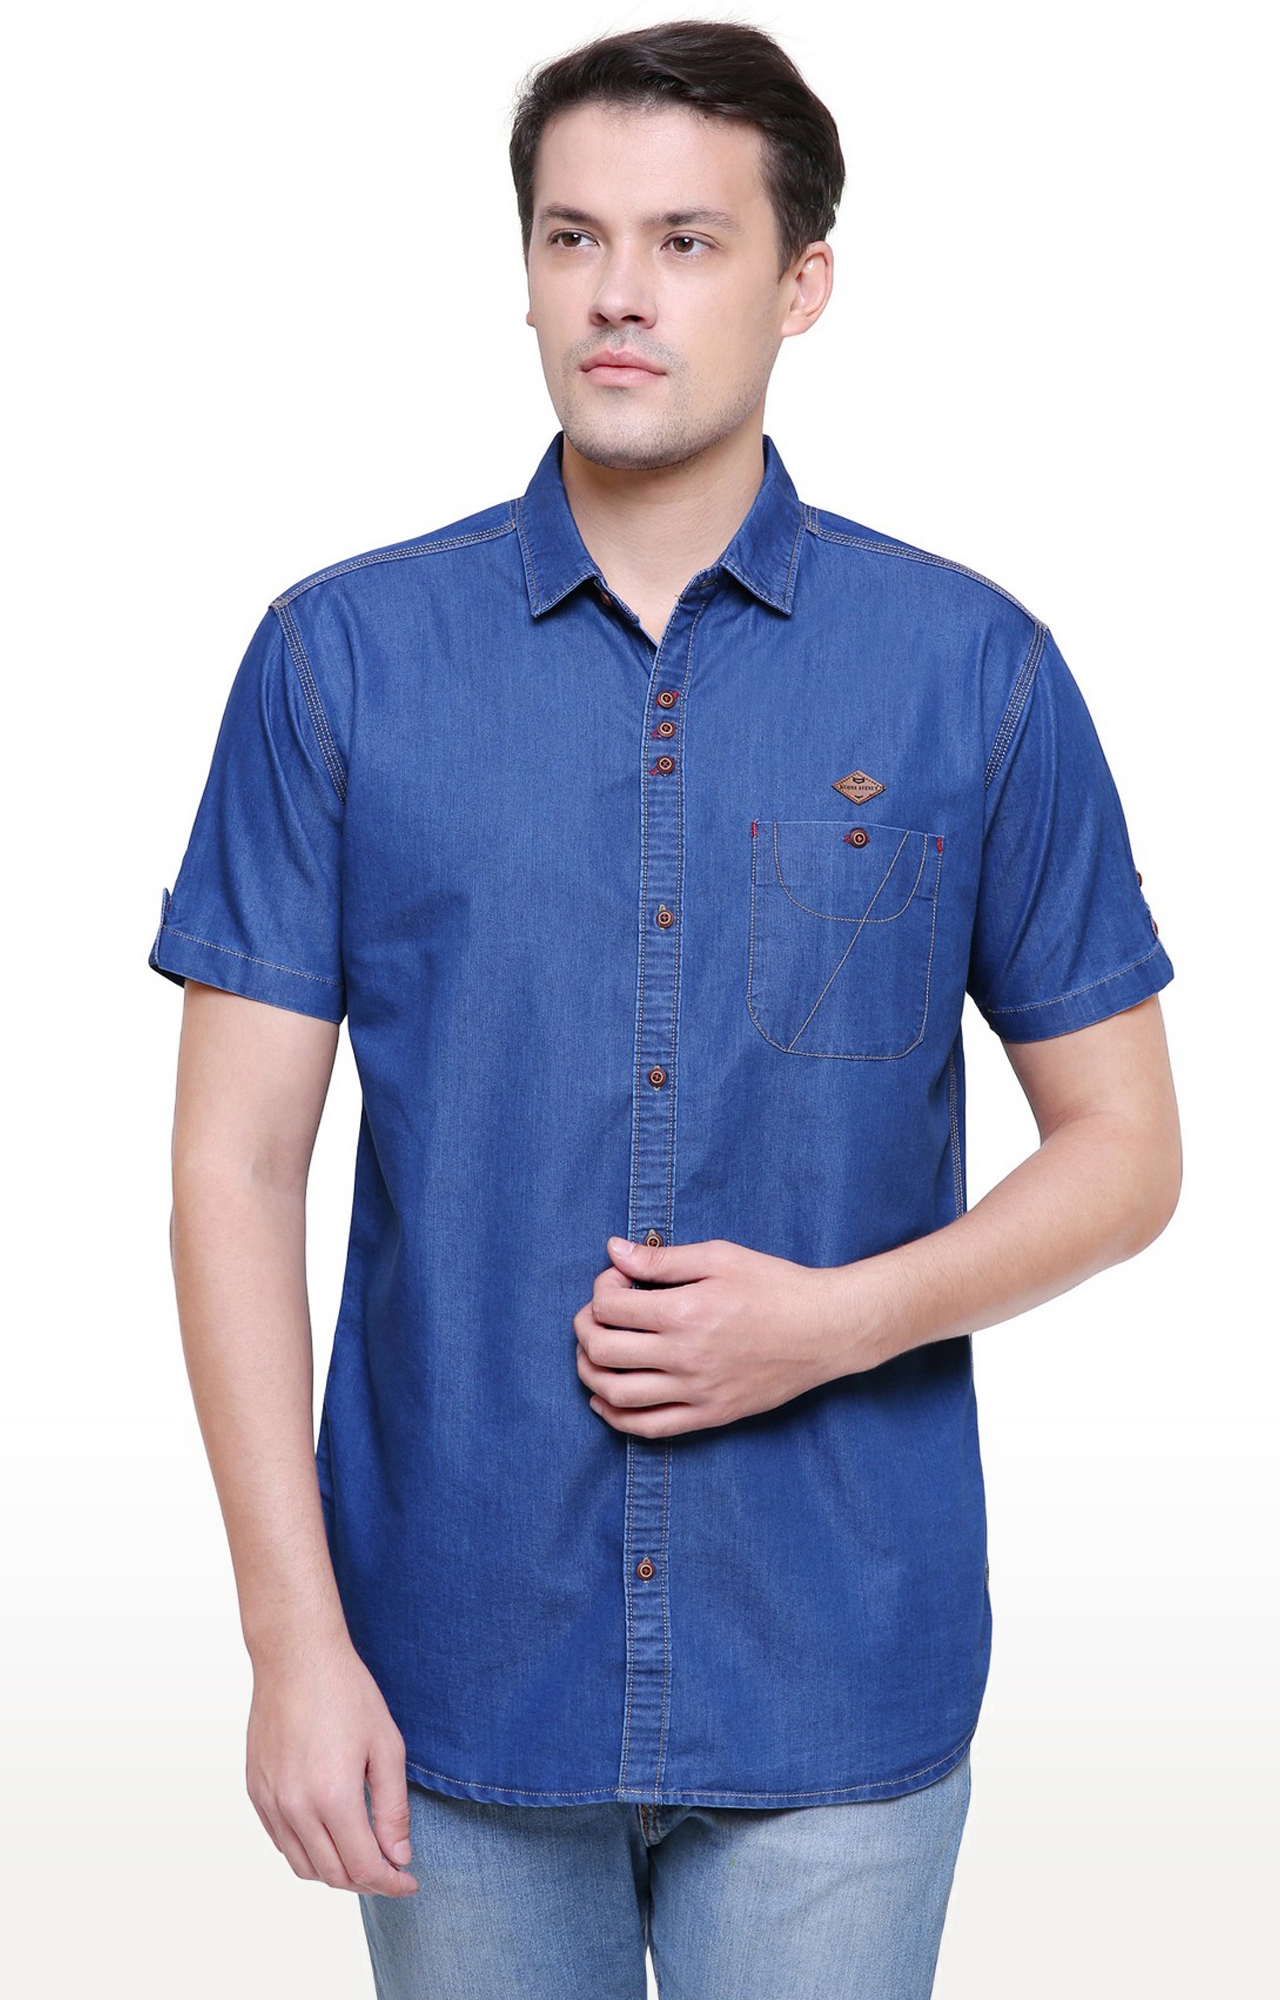 Kuons Avenue | Kuons Avenue Men's True Blue Half Sleeve Denim Shirt 0